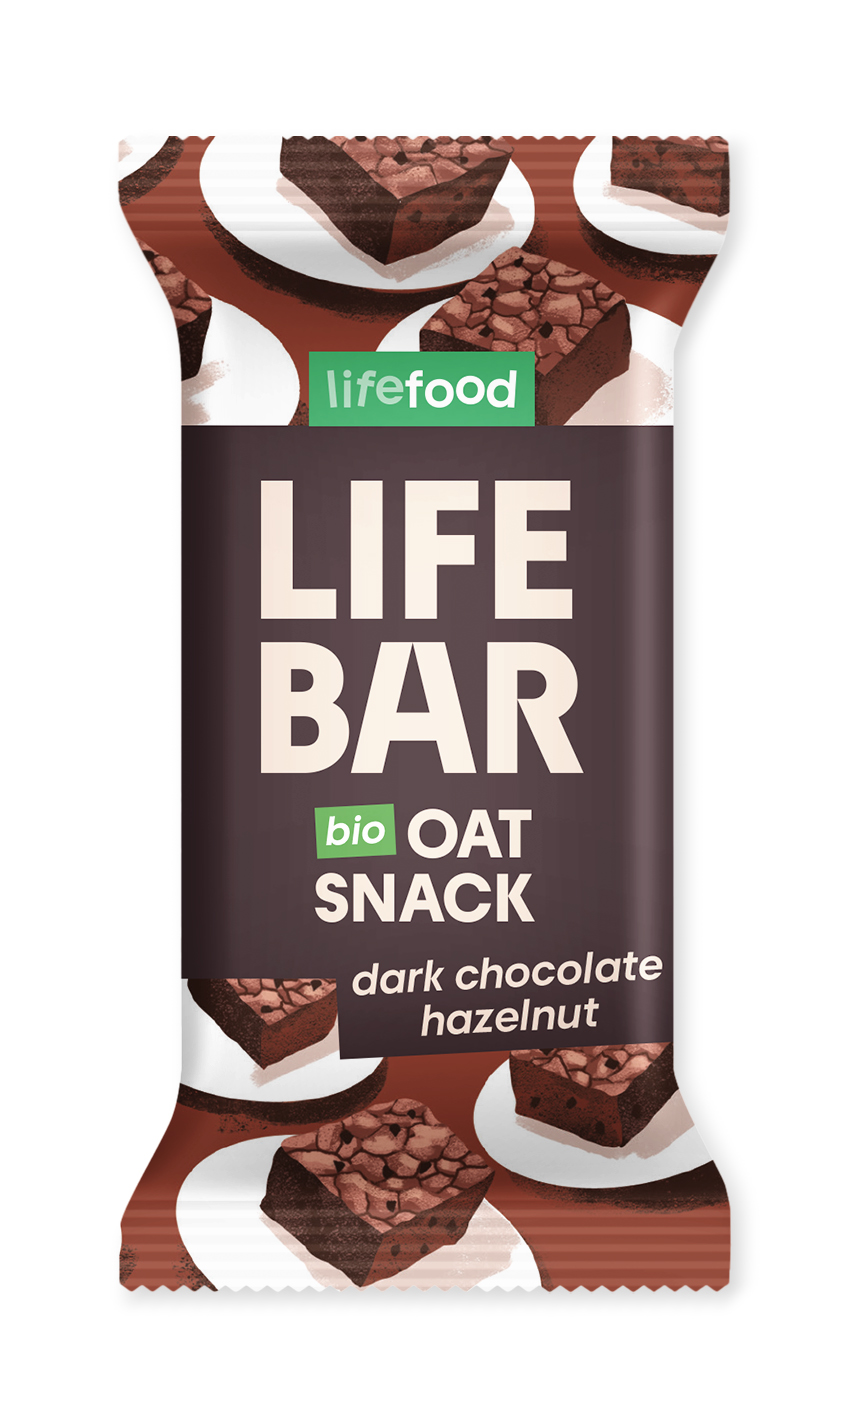 Lifefood Lifebar haverreep dark chocolate hazelnut bio & raw 40g